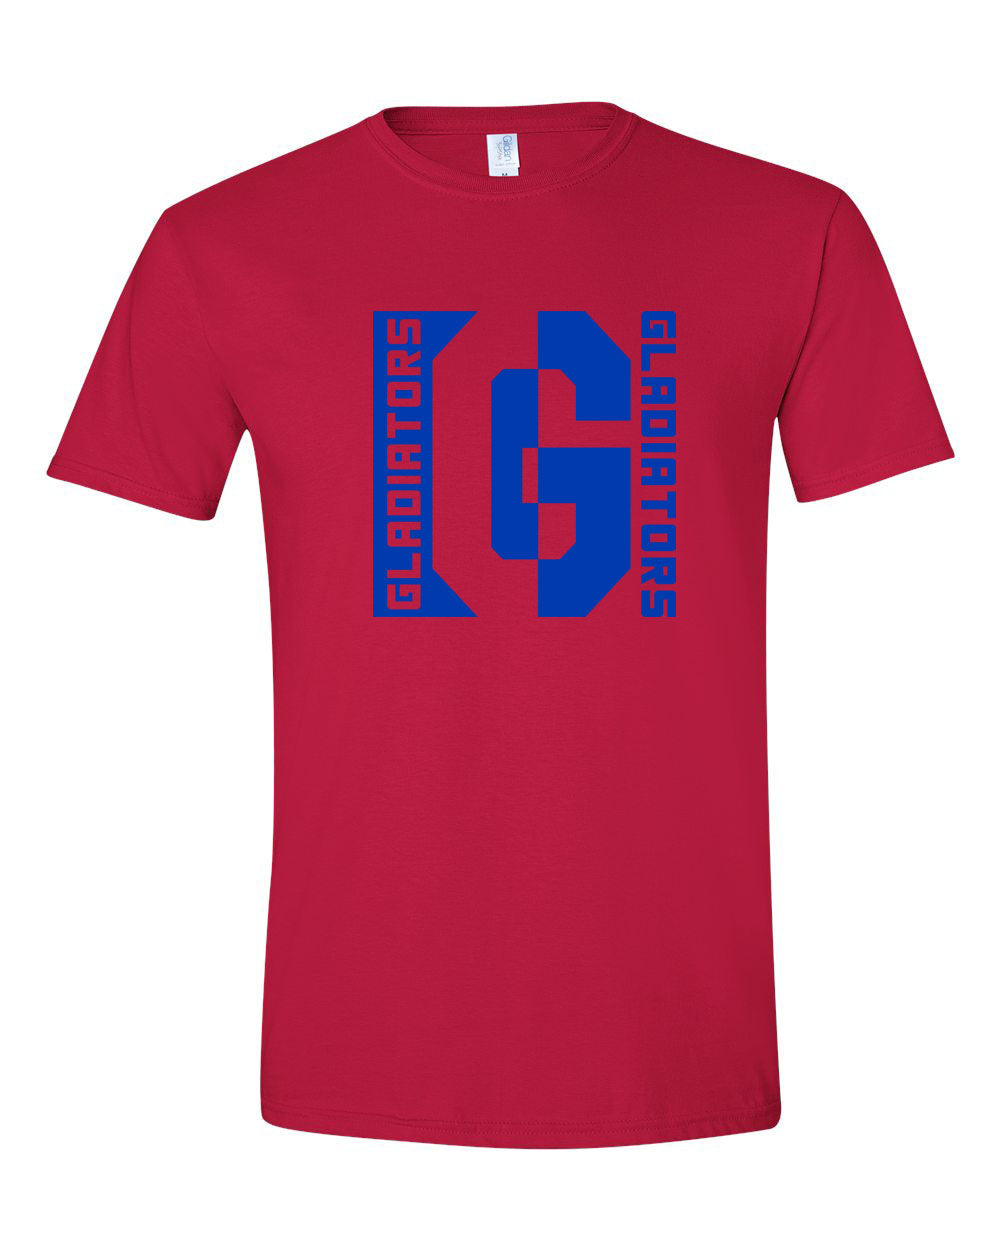 Goshen School Design 5 t-Shirt